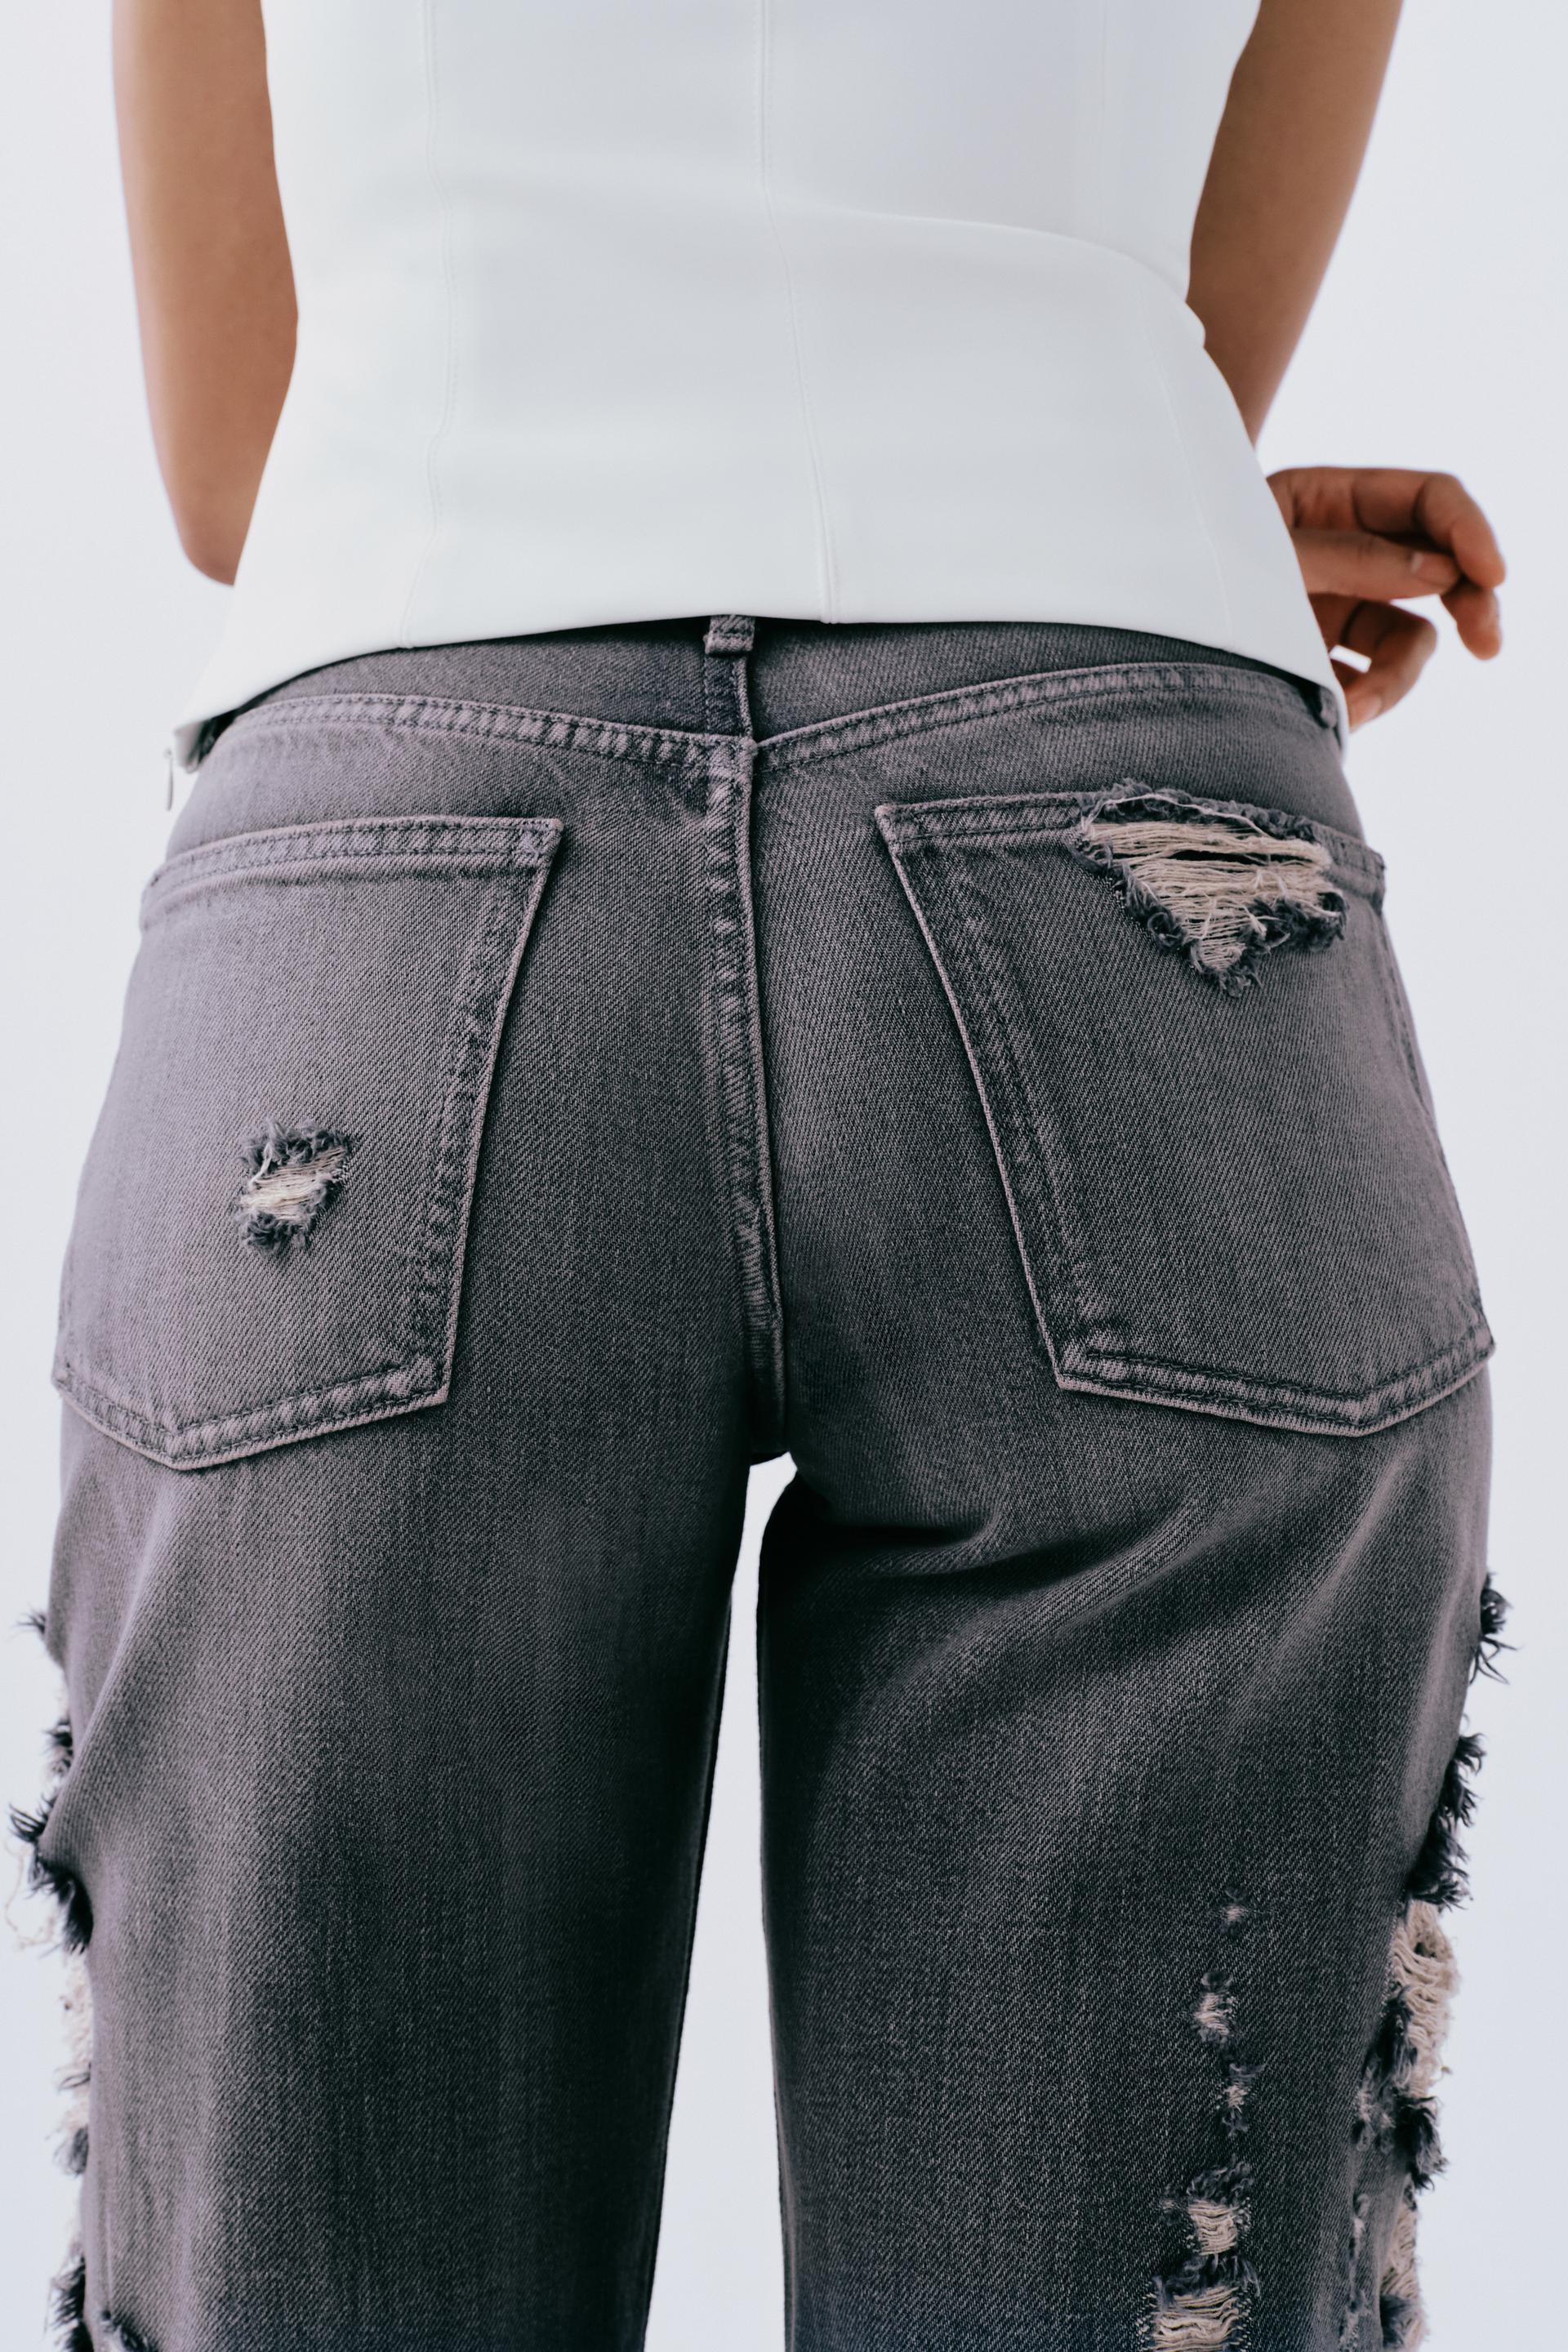 zara snake print jeans, size 4 shown on a 26” waist